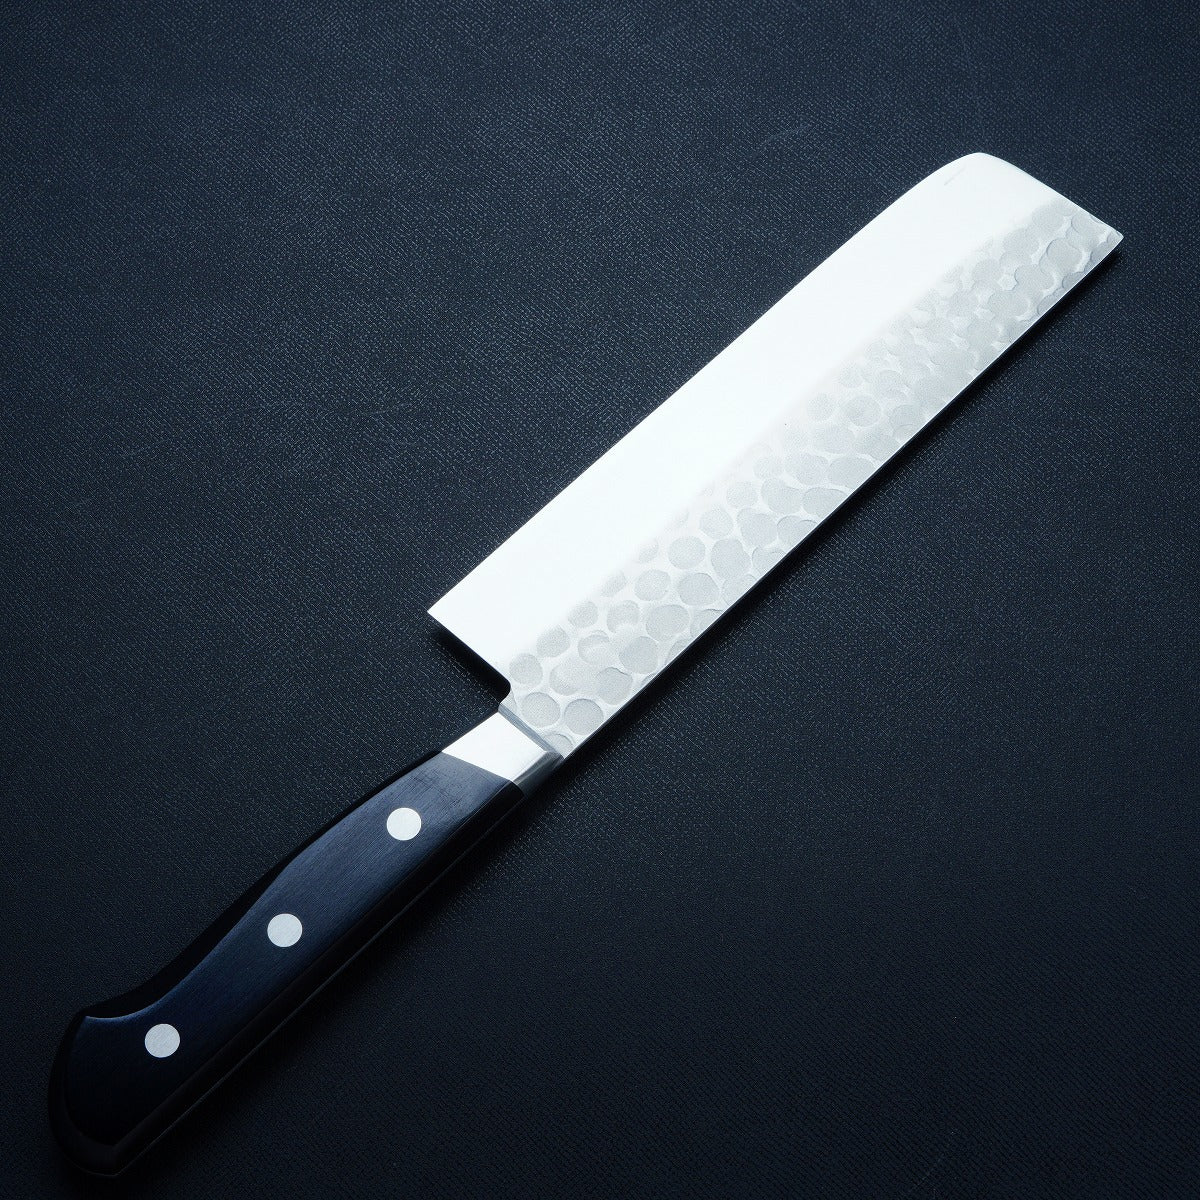 HONMAMON Nakiri (Vegetable Knife) Aogami Steel No.2 with Stainless Steel, 165mm